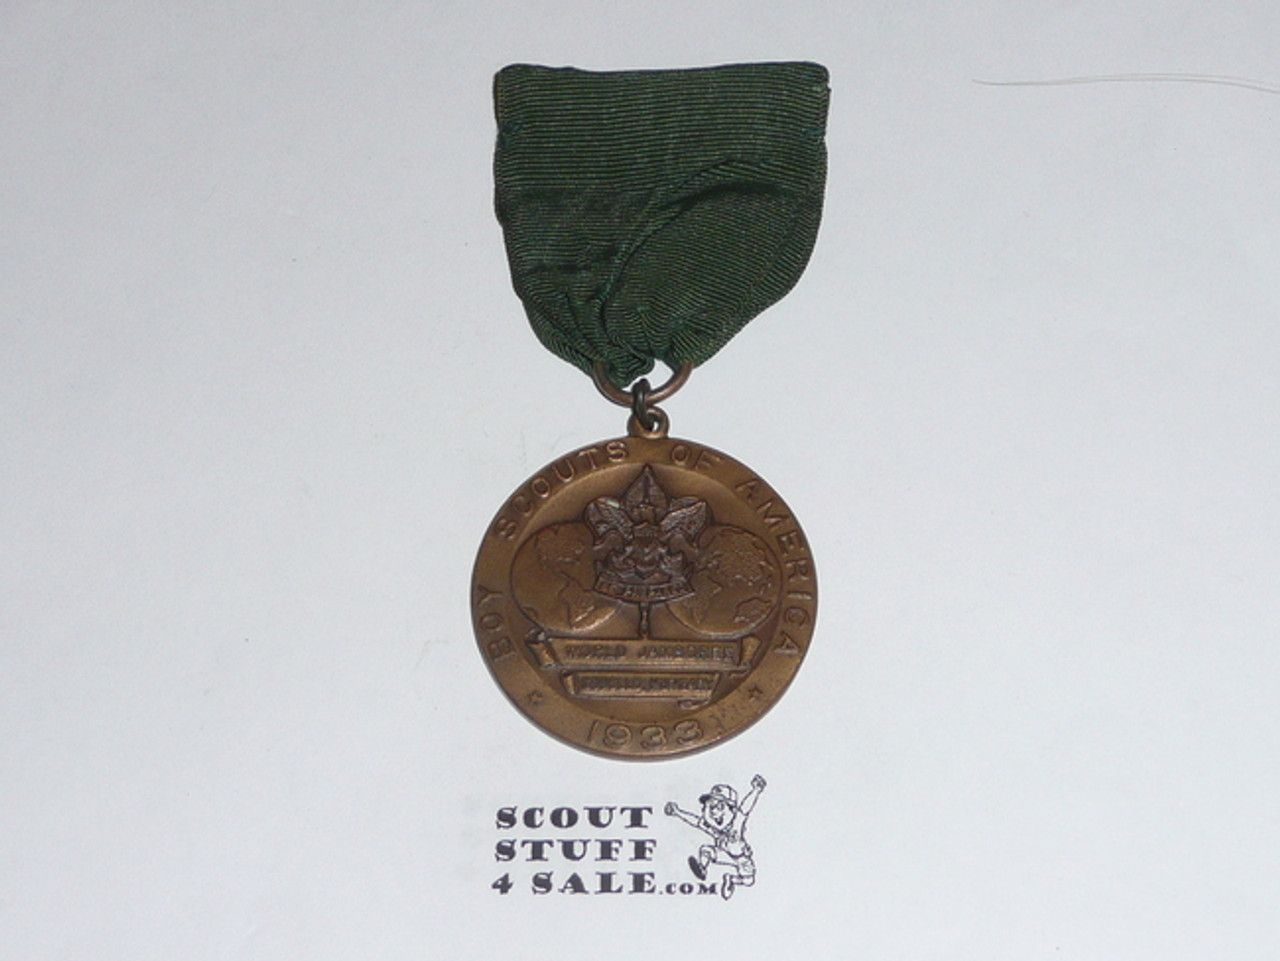 1933 Boy Scout World Jamboree USA Contingent Medal